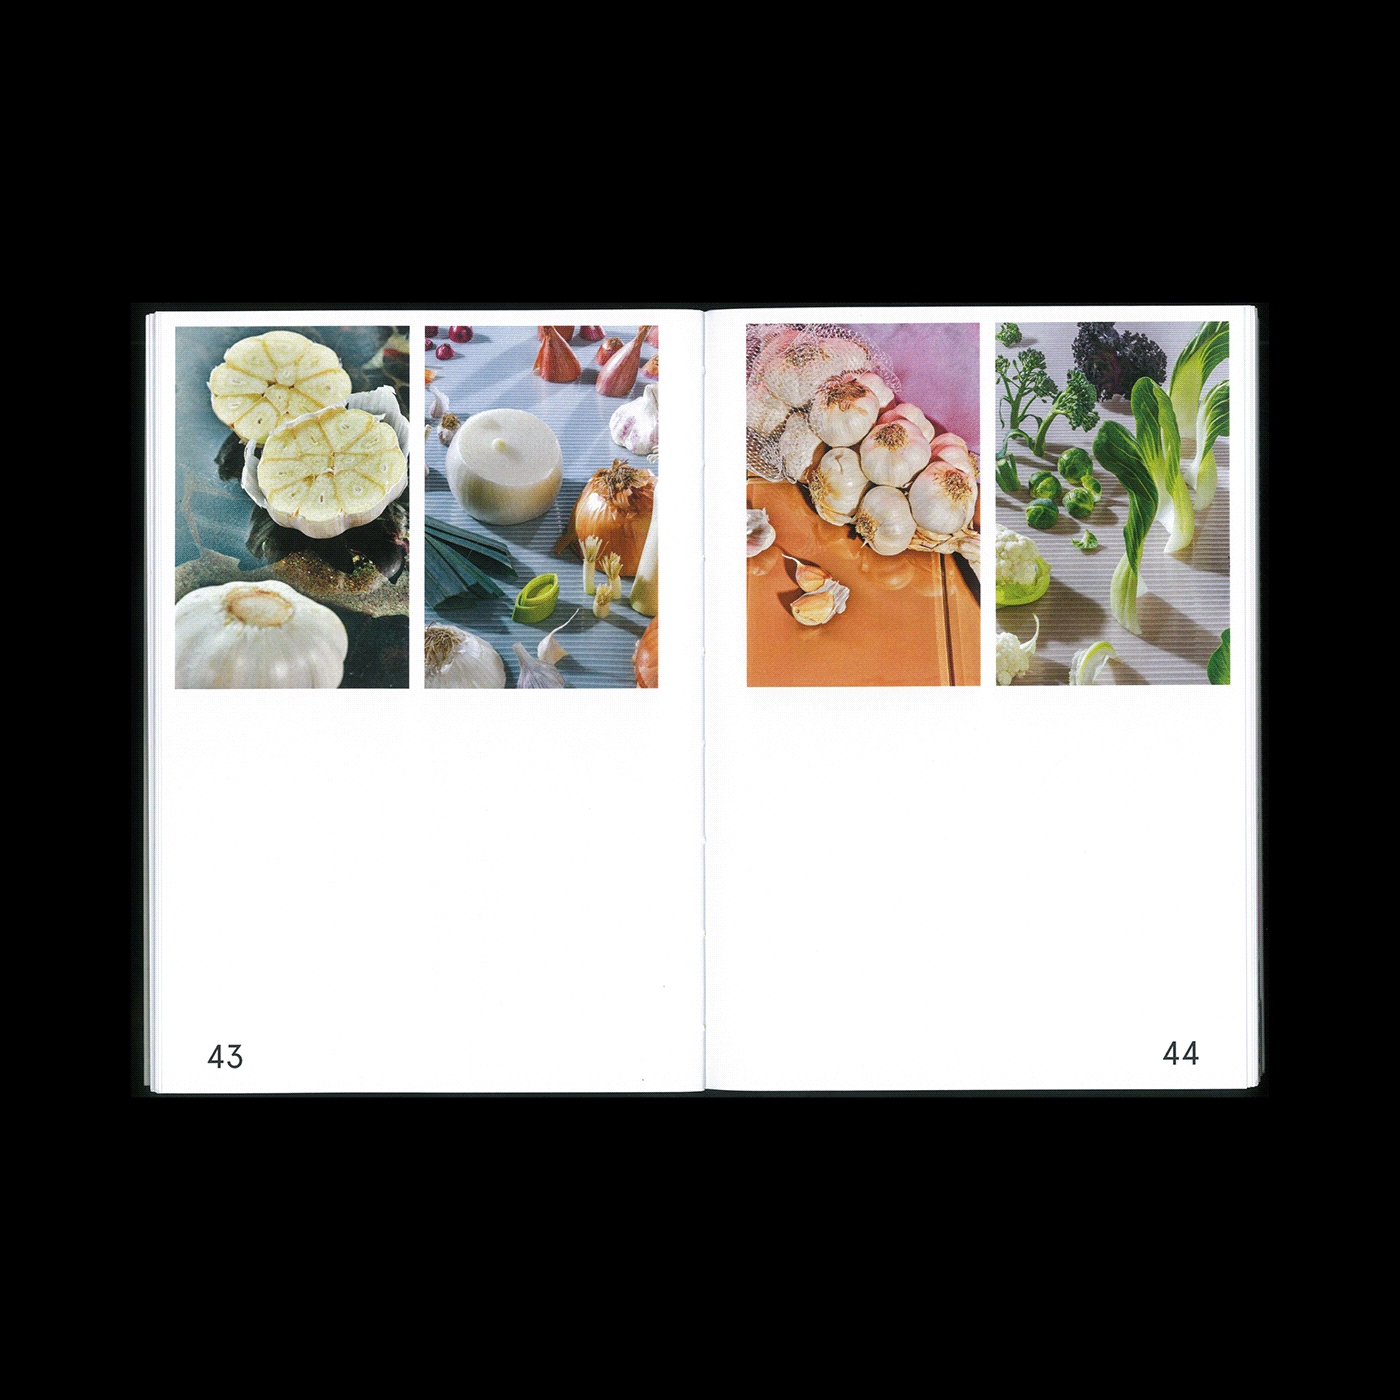 photobook photobook design photobook layout editorial book design InDesign